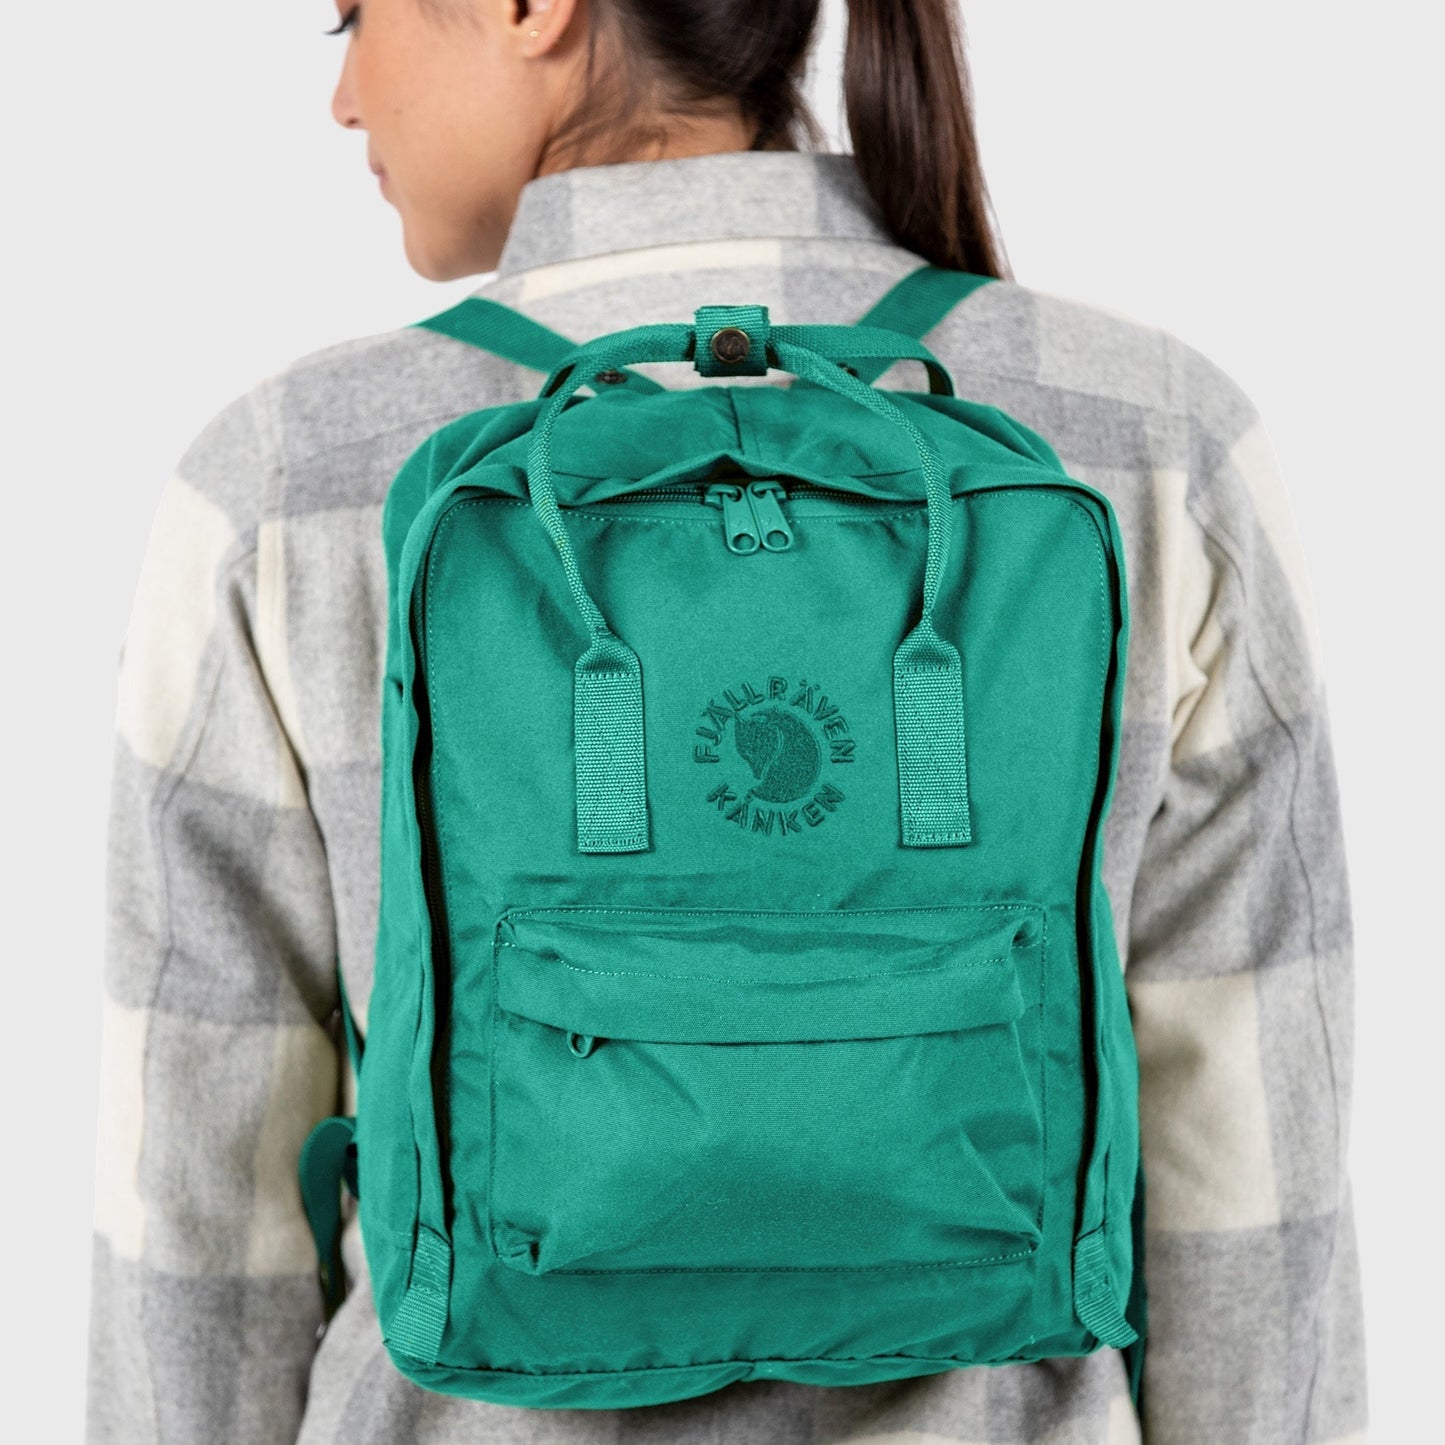 FJÄLLRÄVEN - 瑞典北極狐【狐狸袋】RE-KÅNKEN 16L 背囊 書包 School bag outdoor backpack 23548-525 UN